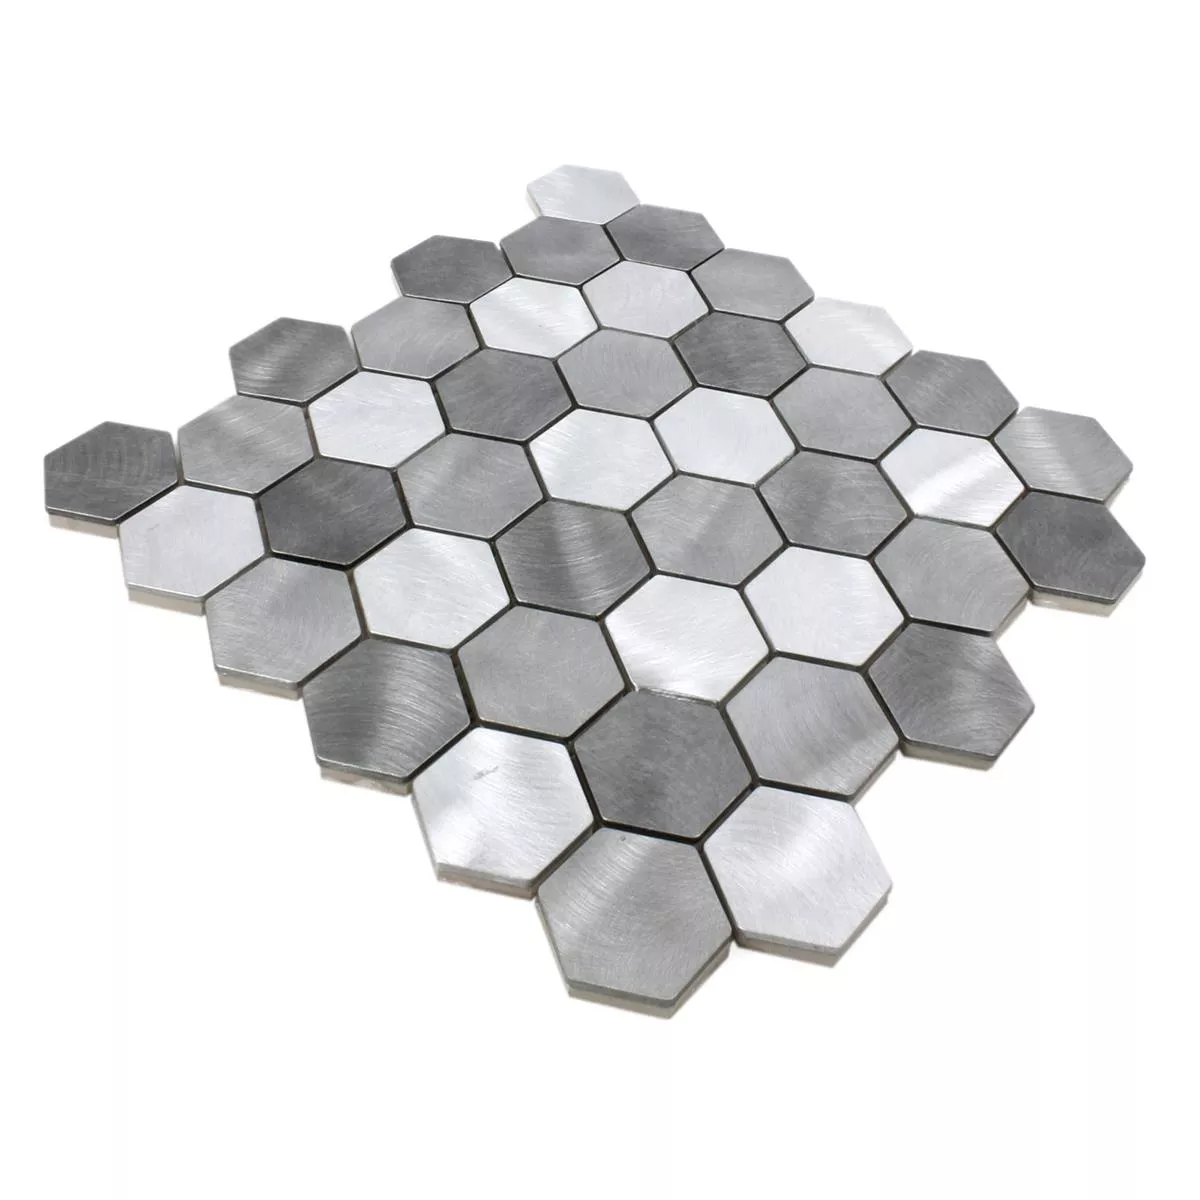 Sample Mosaic Tiles Aluminium Manhatten Hexagon Grey Silver